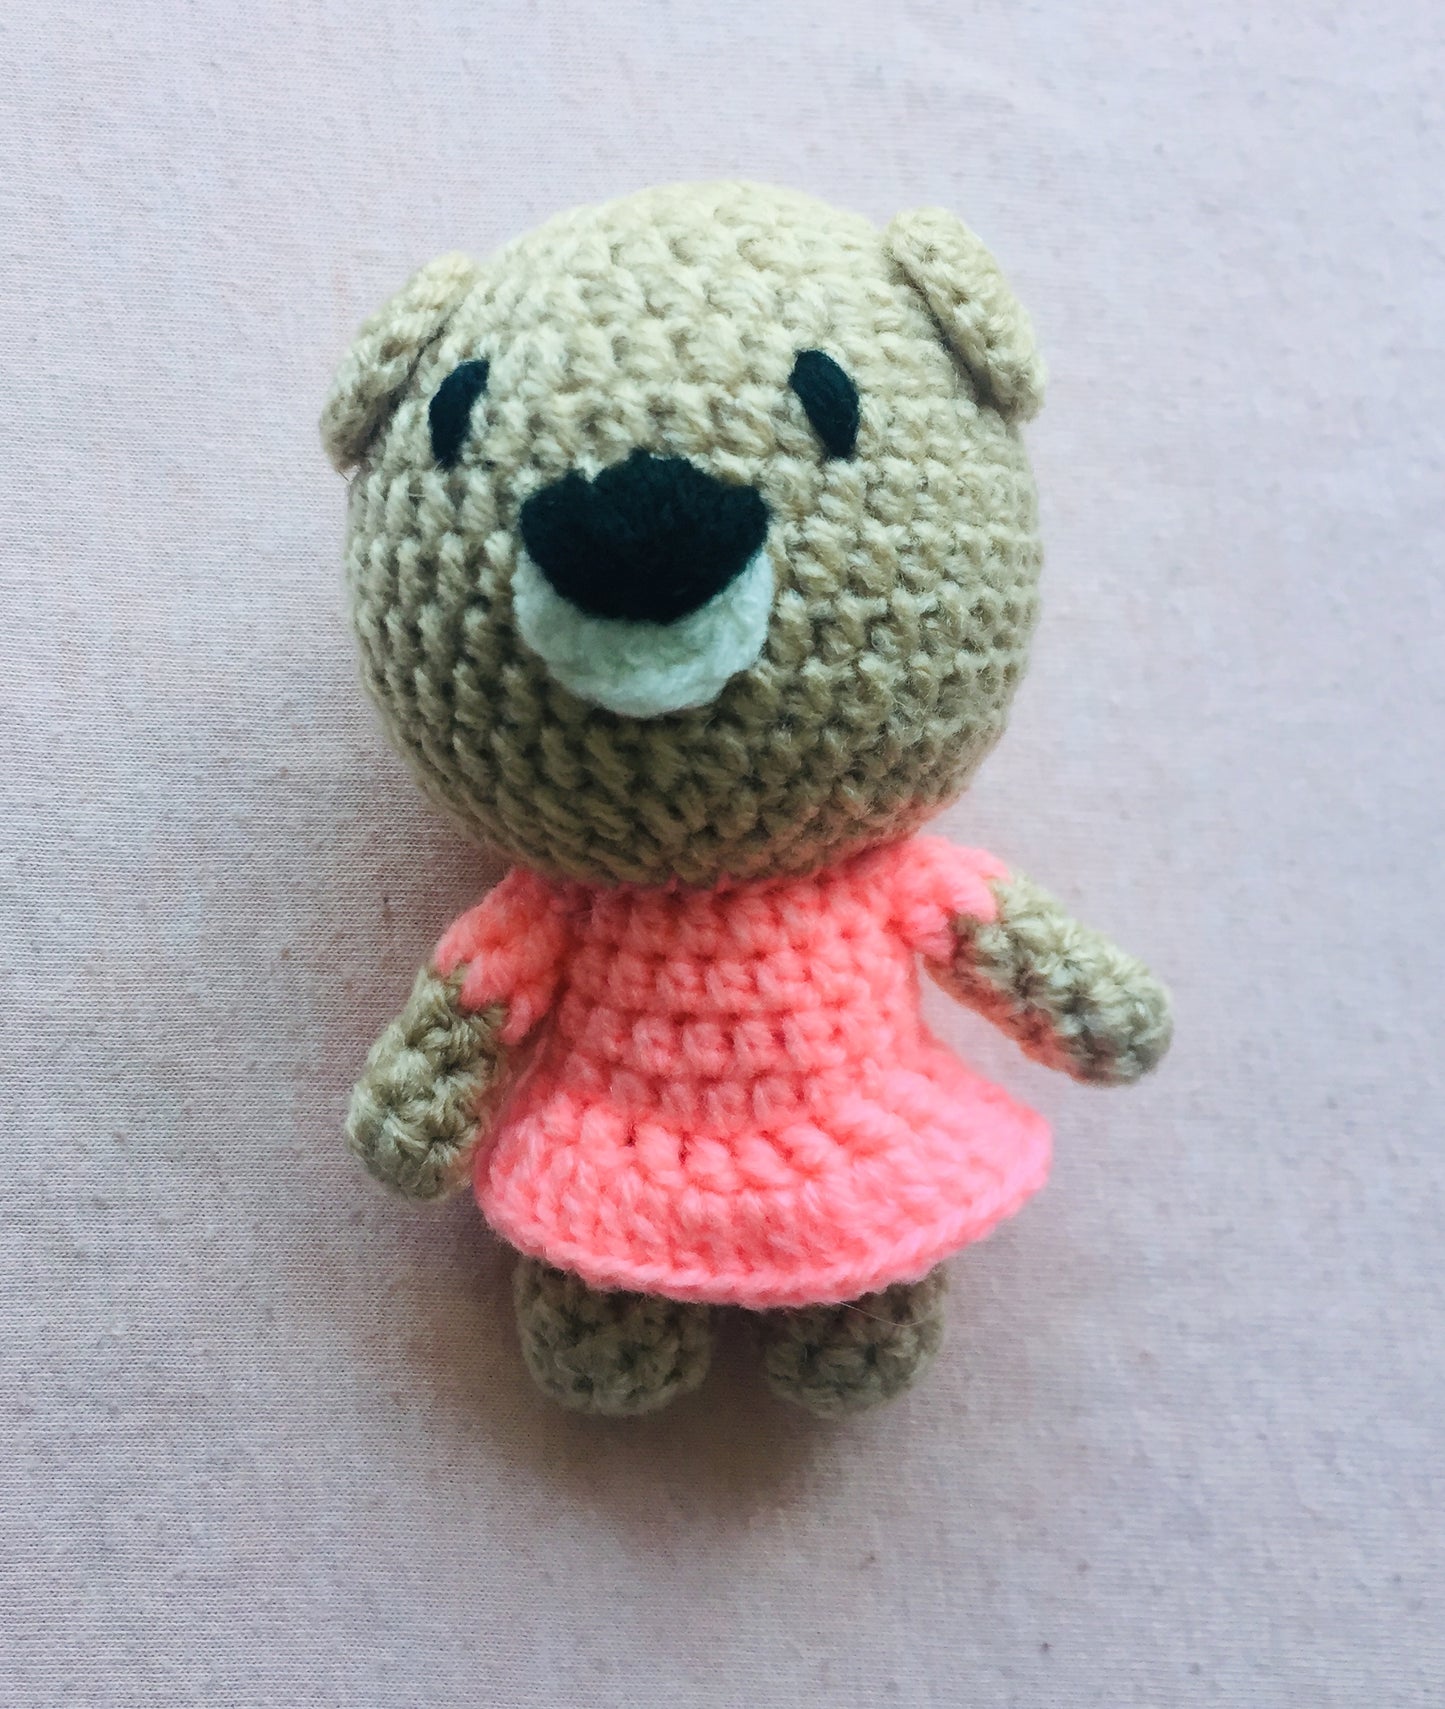 Handmade Cute crochet Small Teddy- Amigurumi stuffed animal